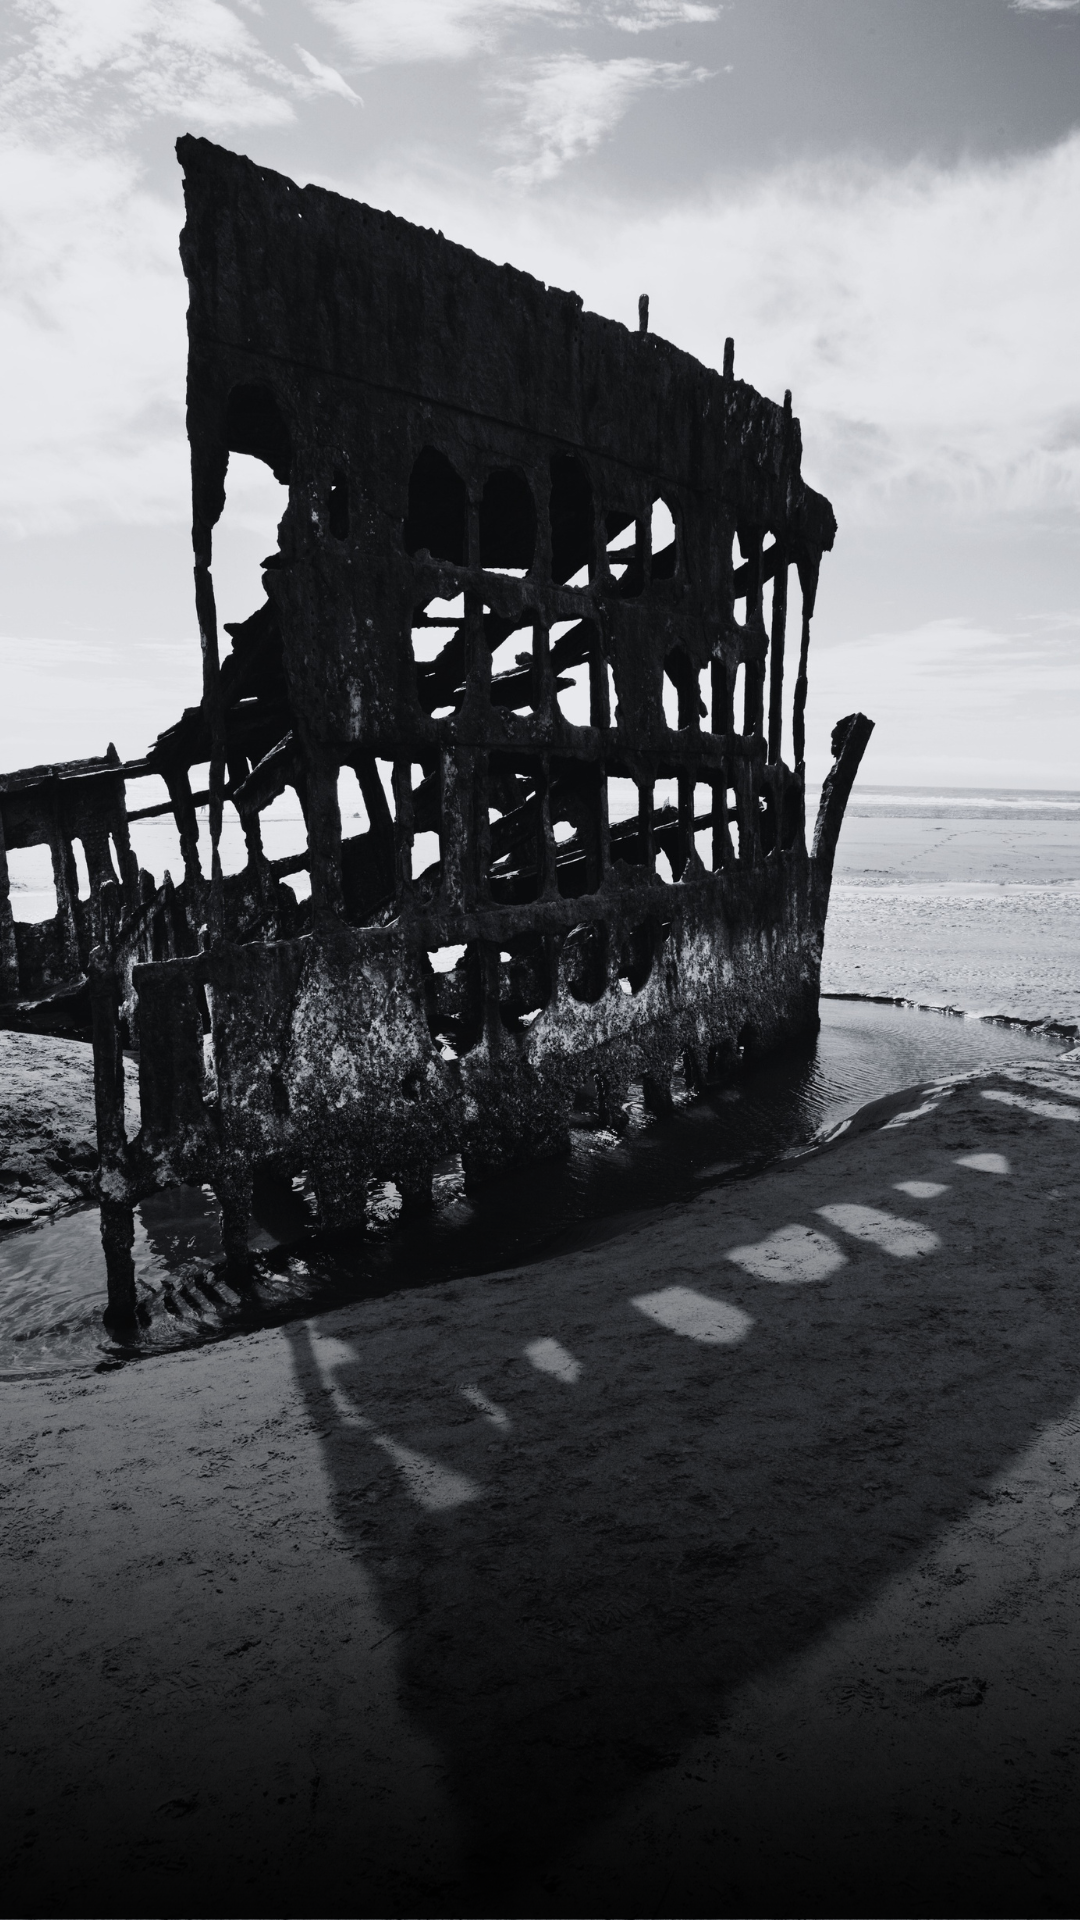 Shipwreck remains believed to be schooner Warren Sawyer